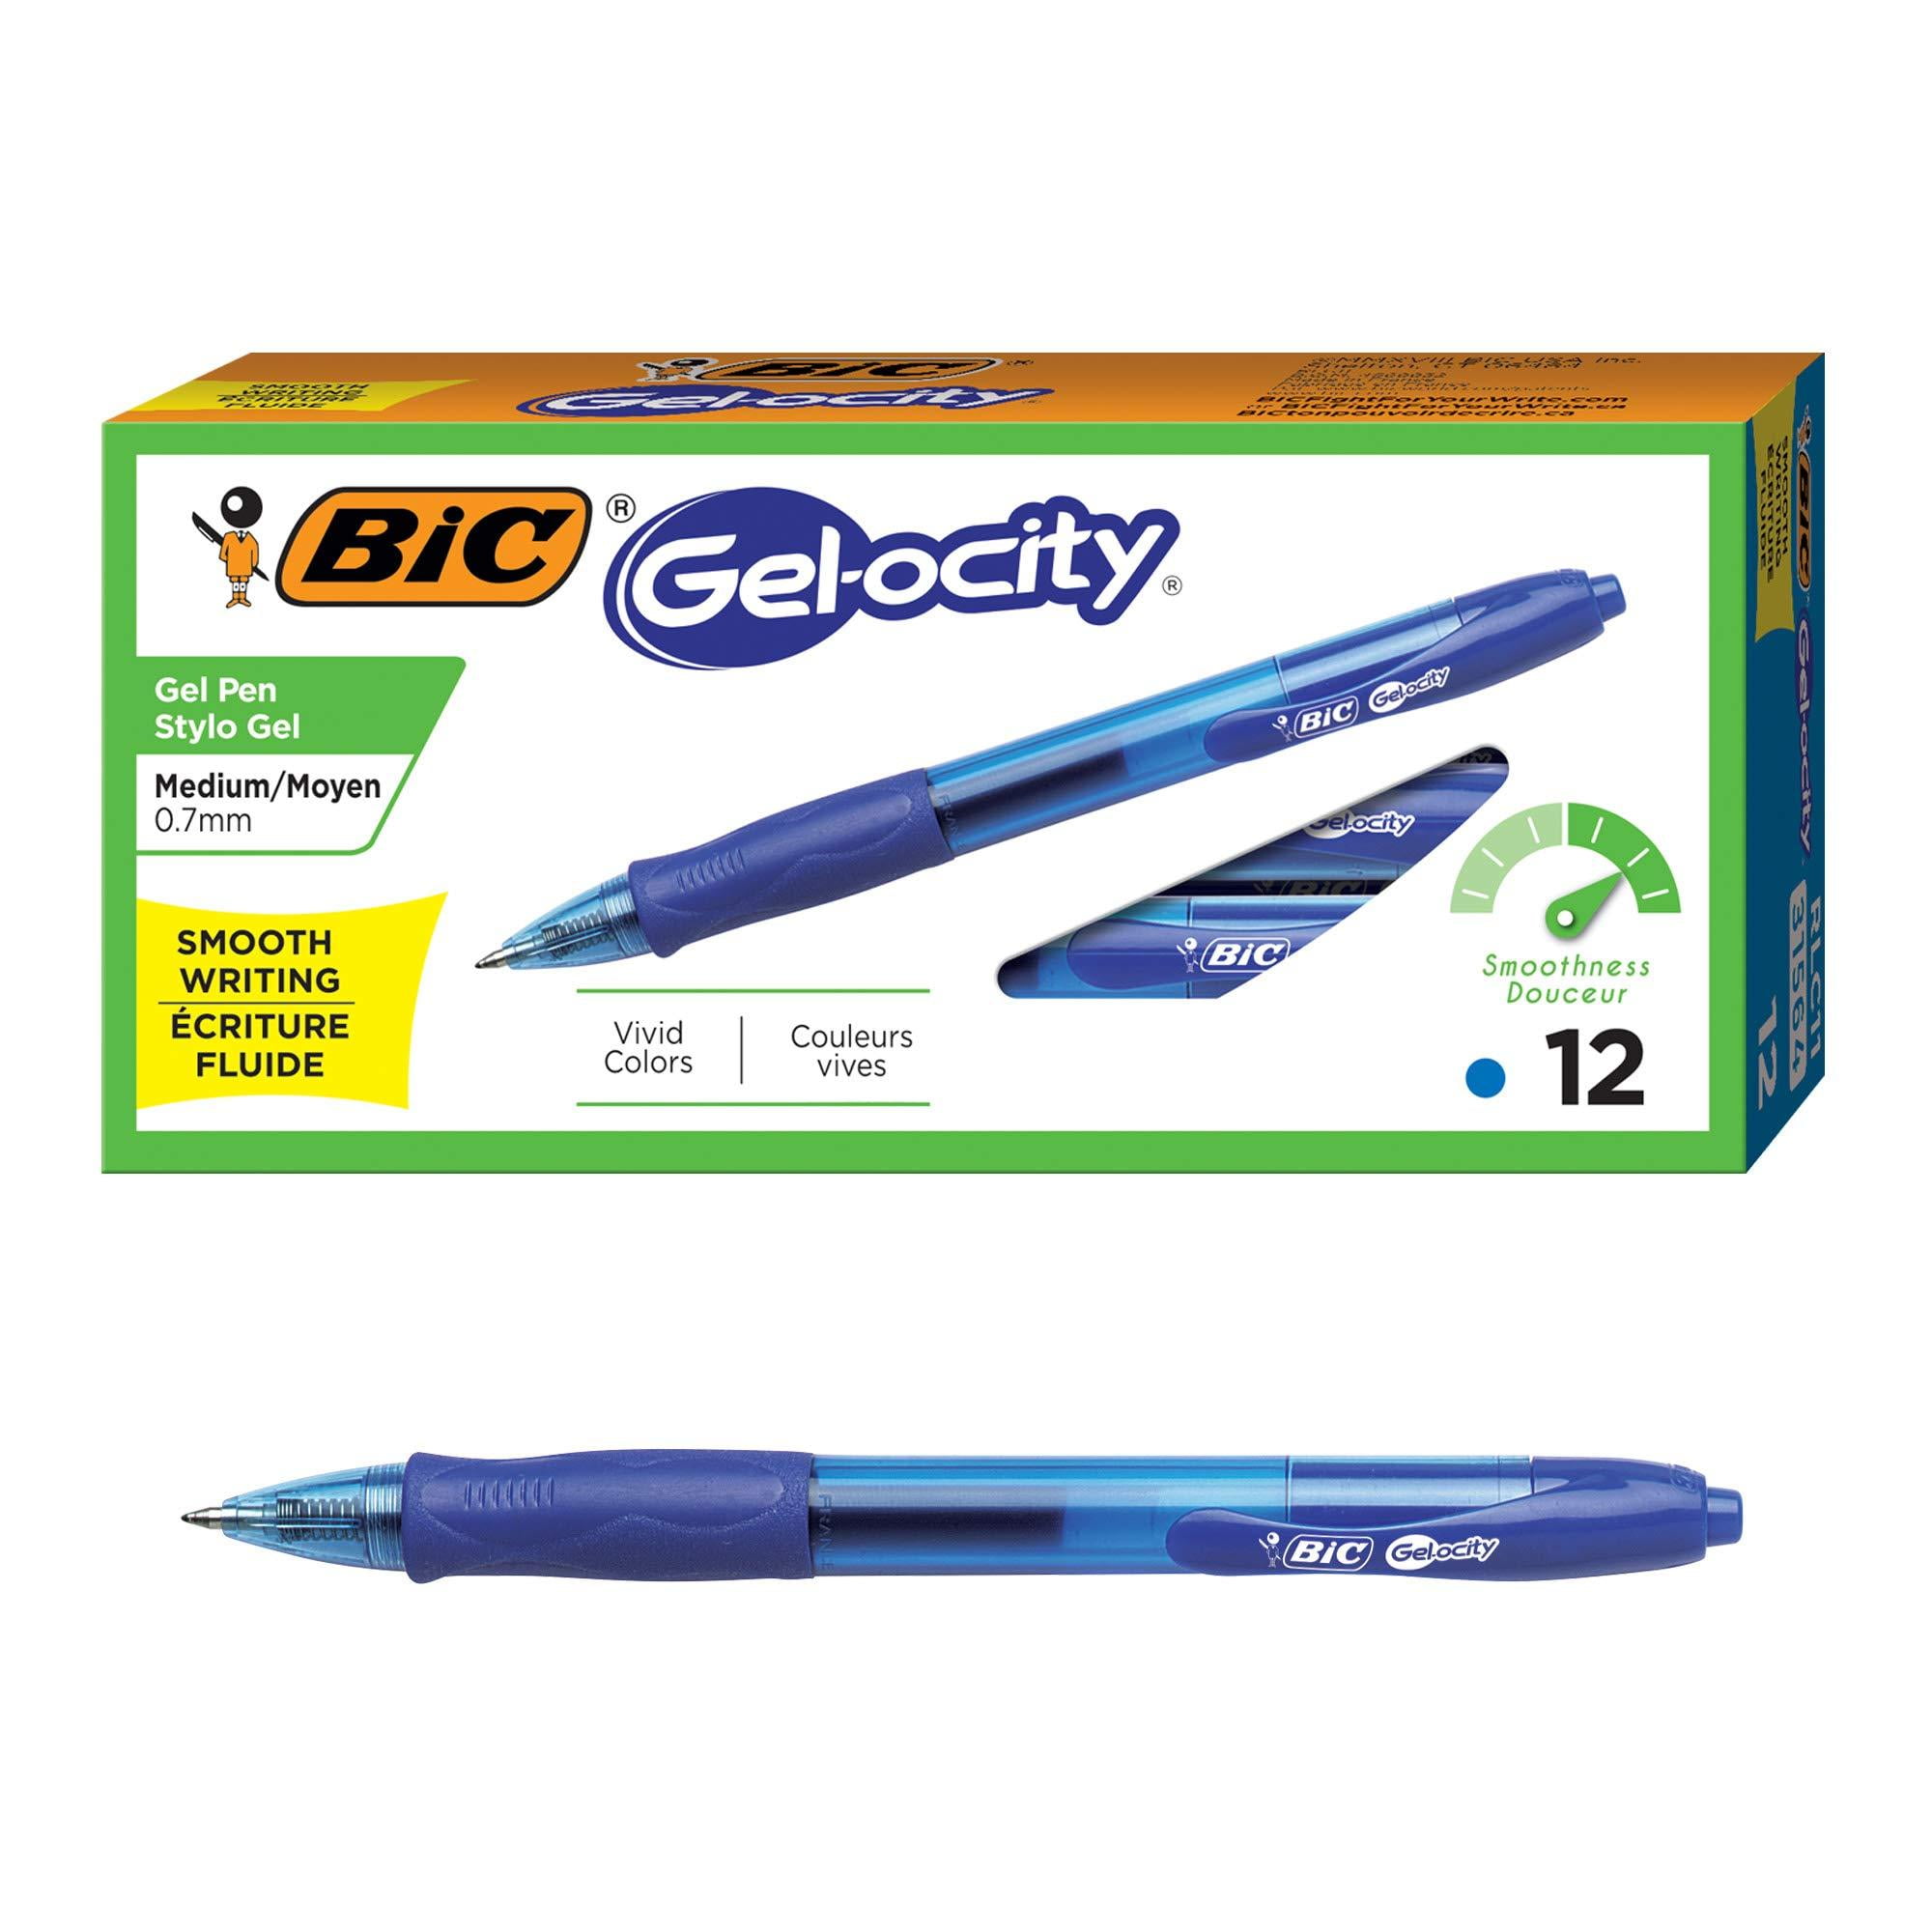 bic-gel-ocity-original-retractable-gel-pen-medium-point-0-7-mm-blue